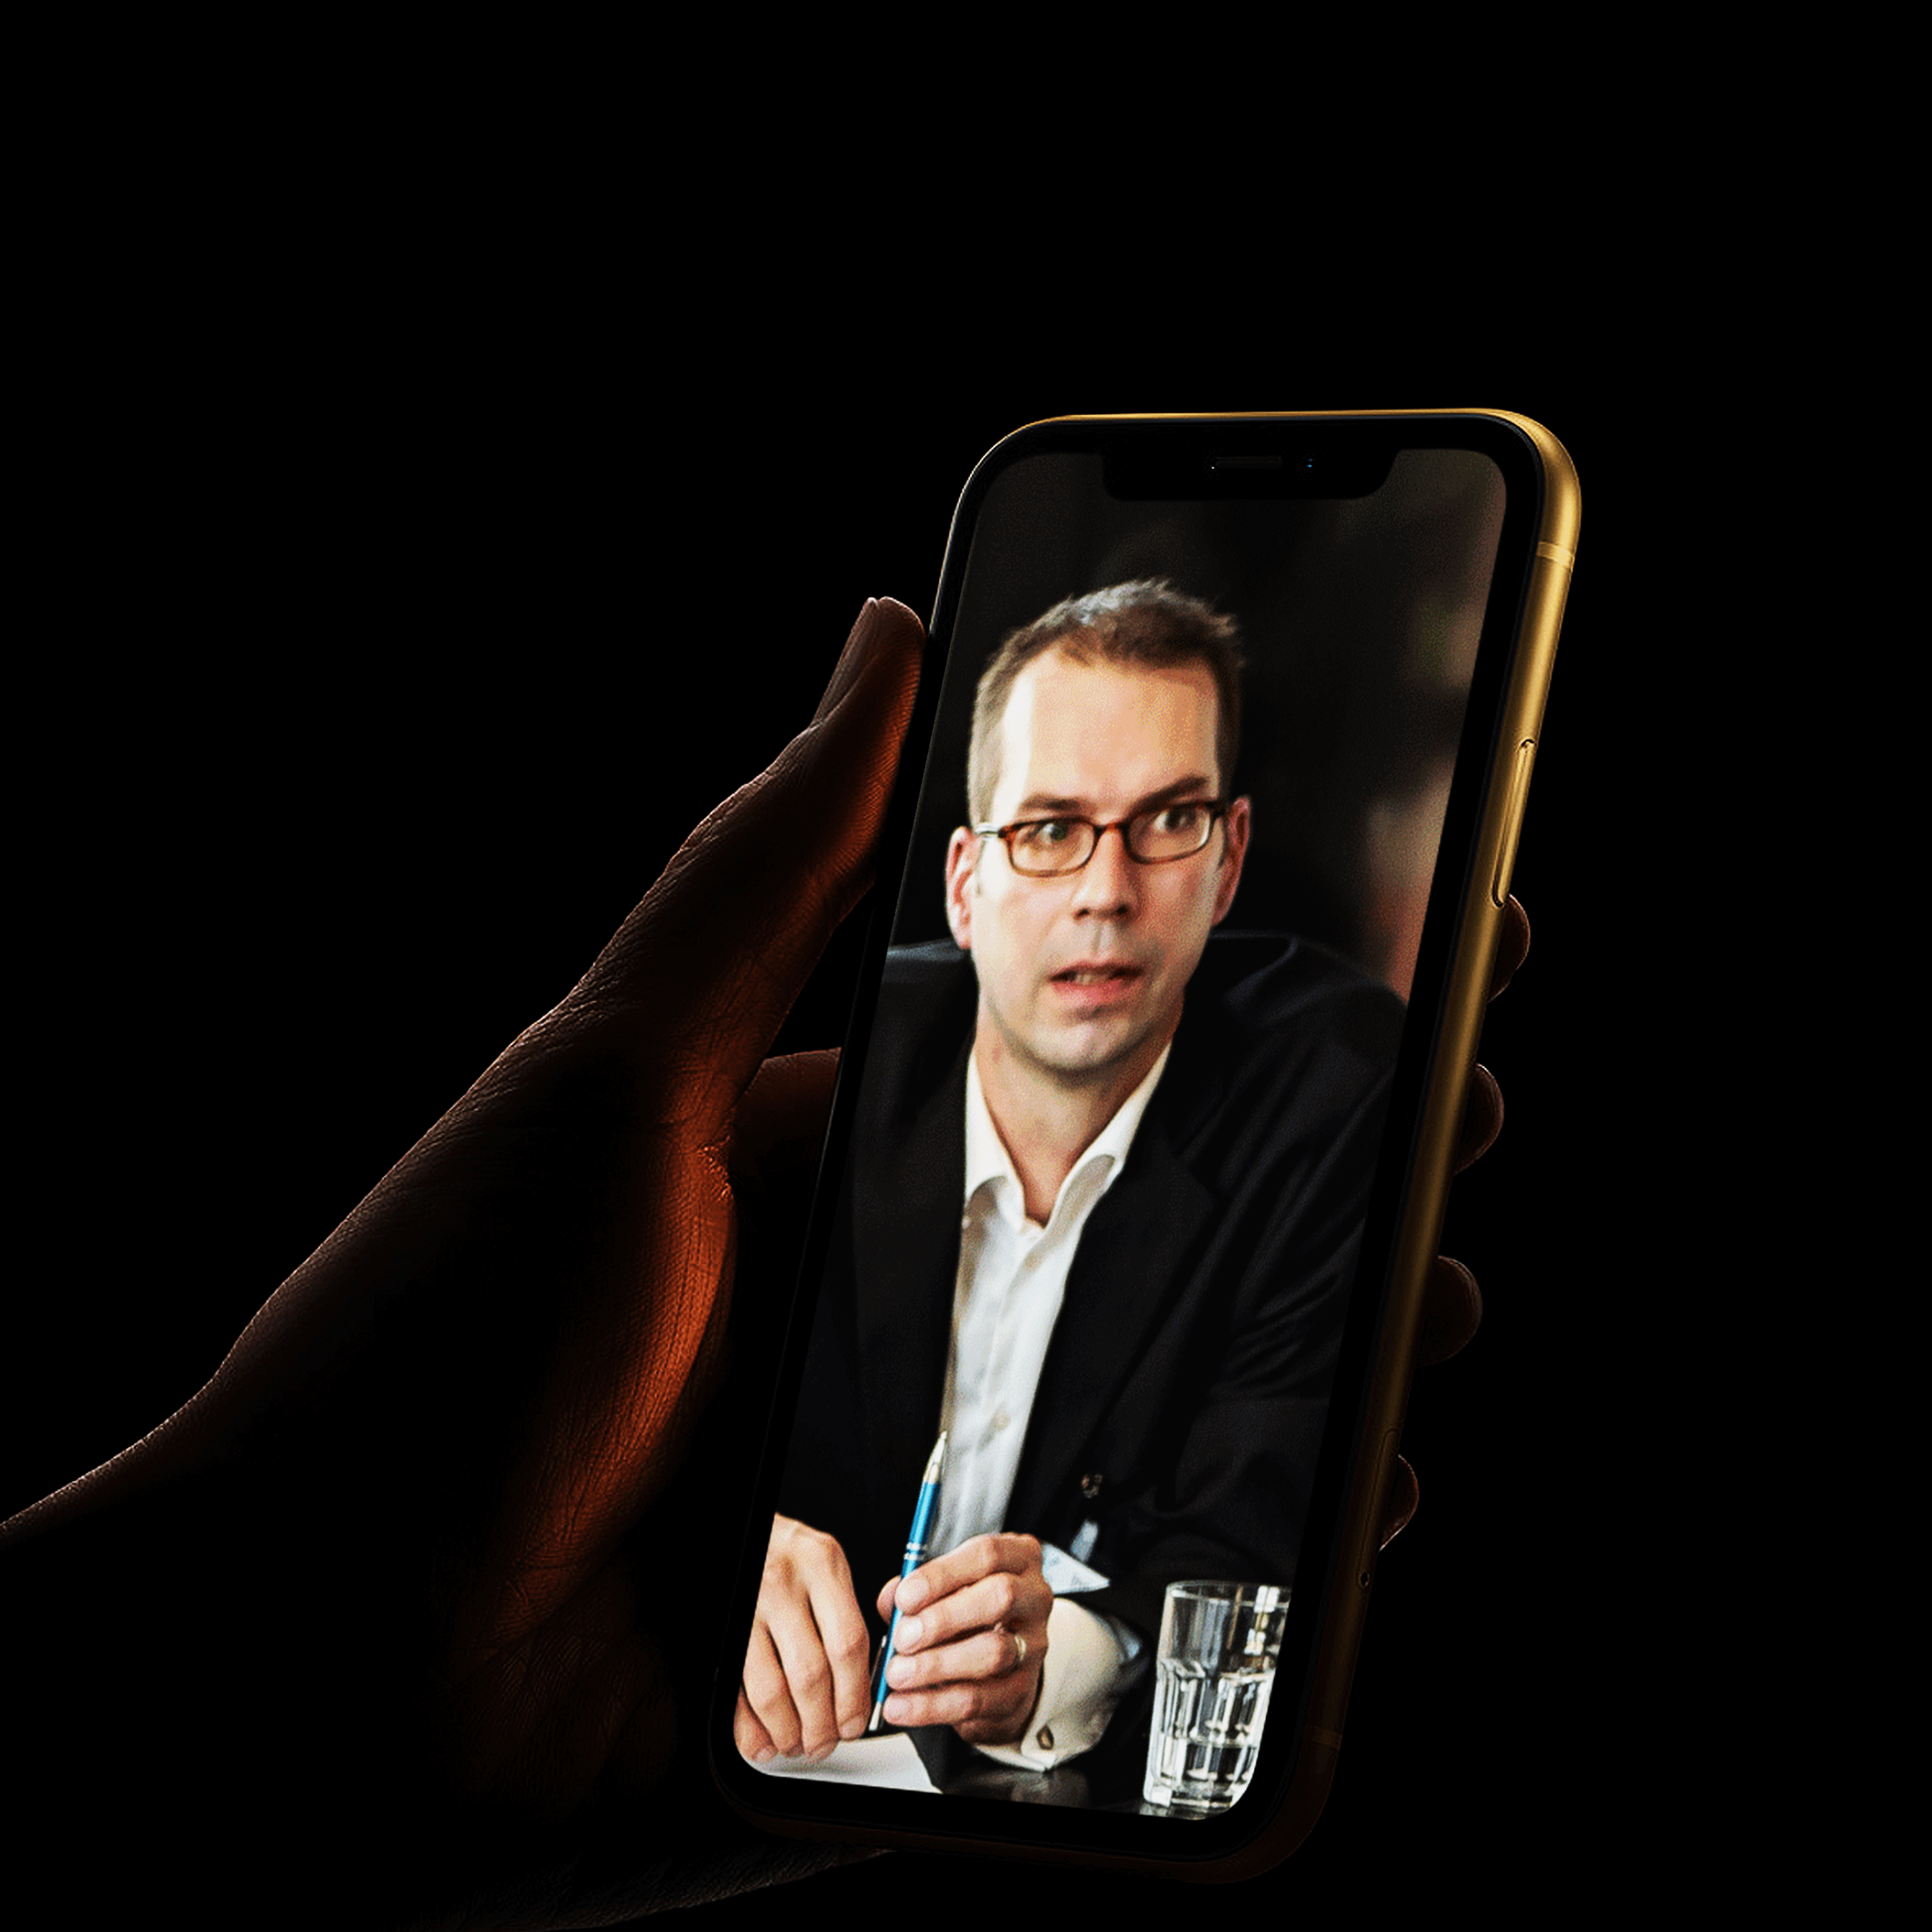 Dr. Thomas Deelmann im iPhone